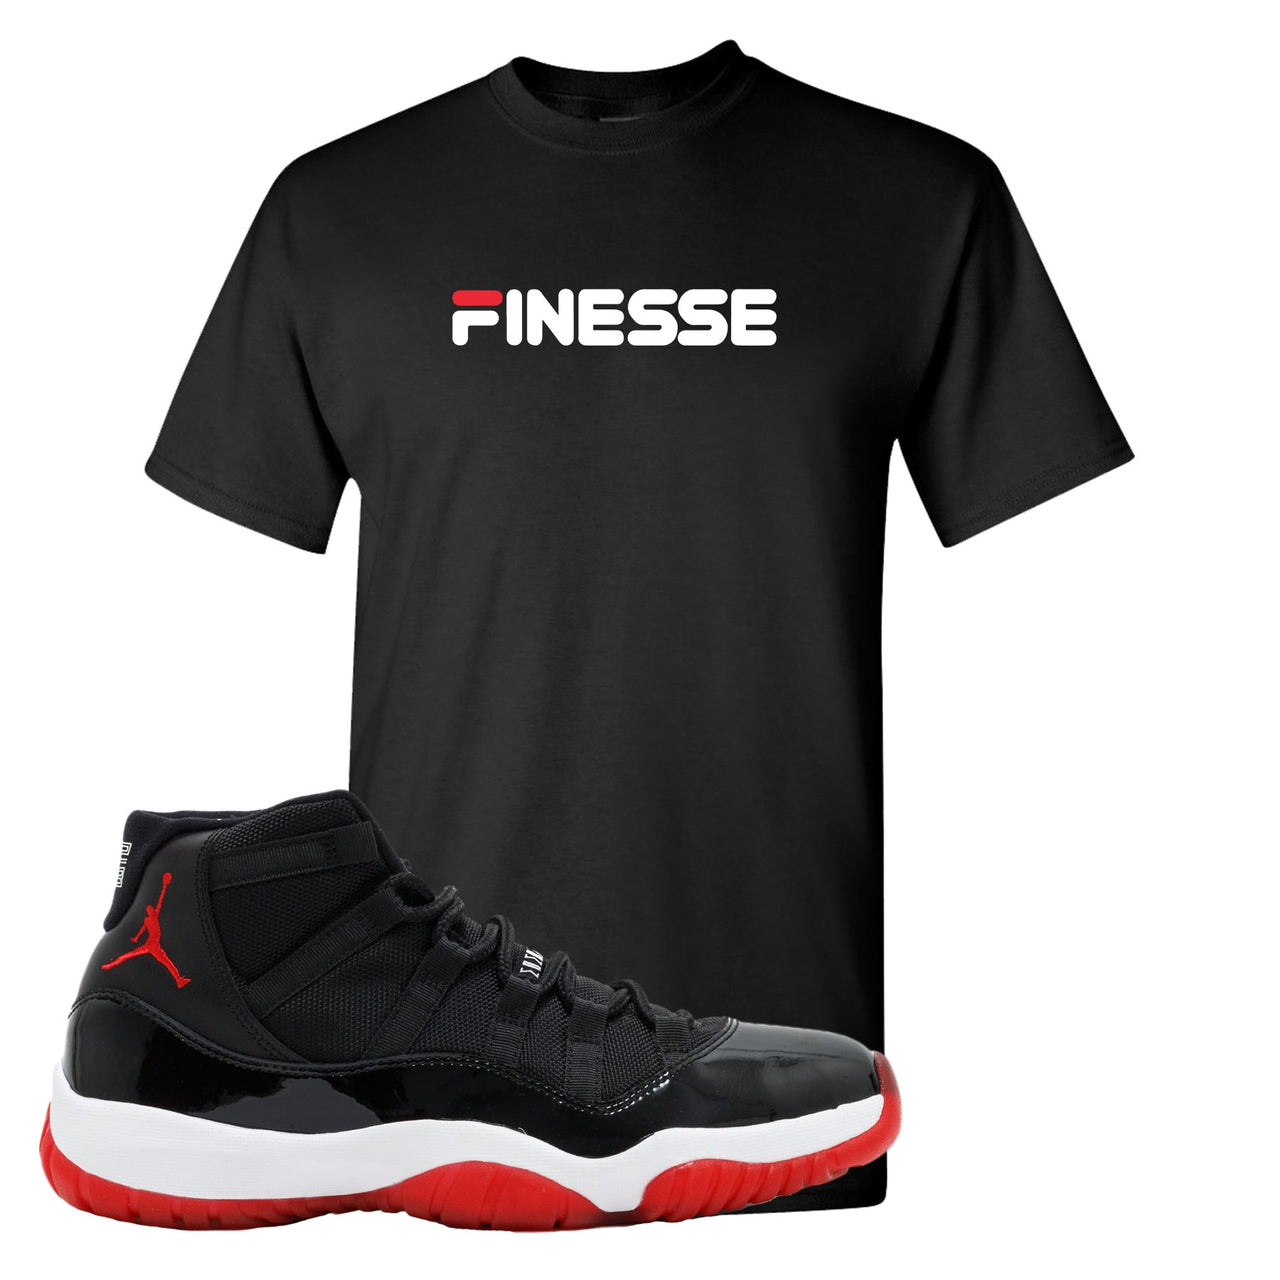 Jordan 11 Bred Finesse Black Sneaker Hook Up T-Shirt